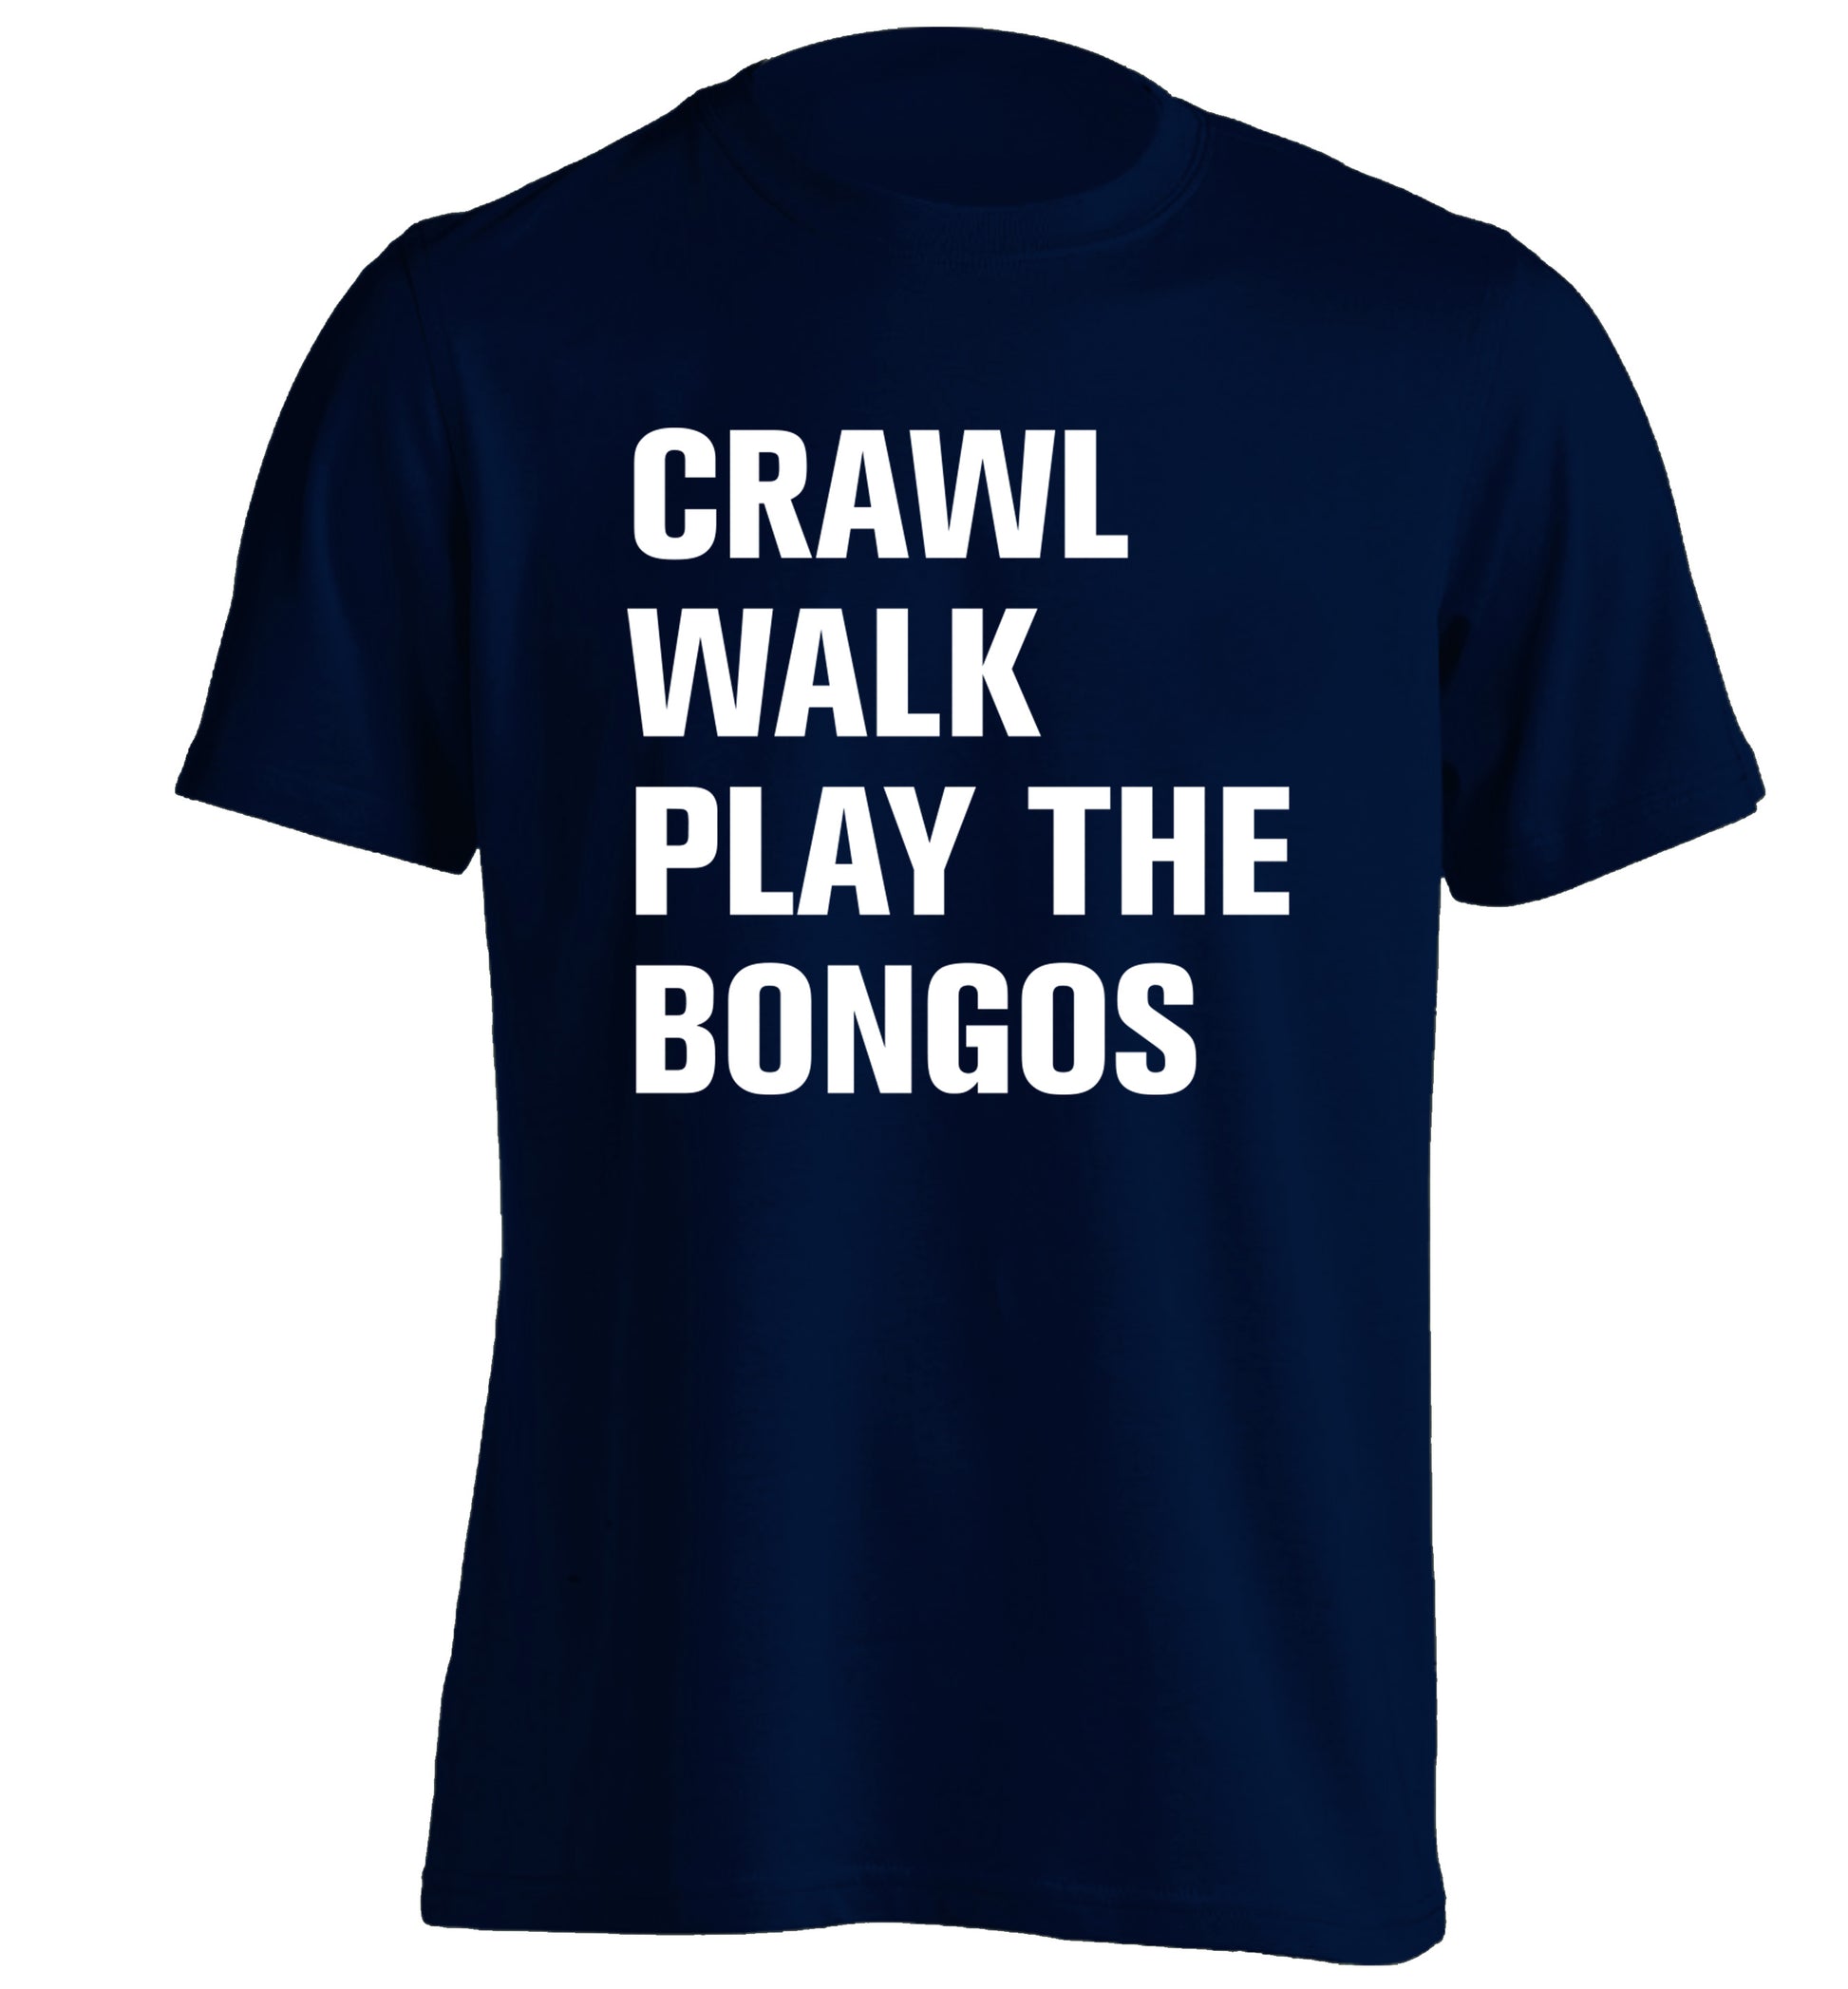 Crawl Walk Play Bongos adults unisex navy Tshirt 2XL